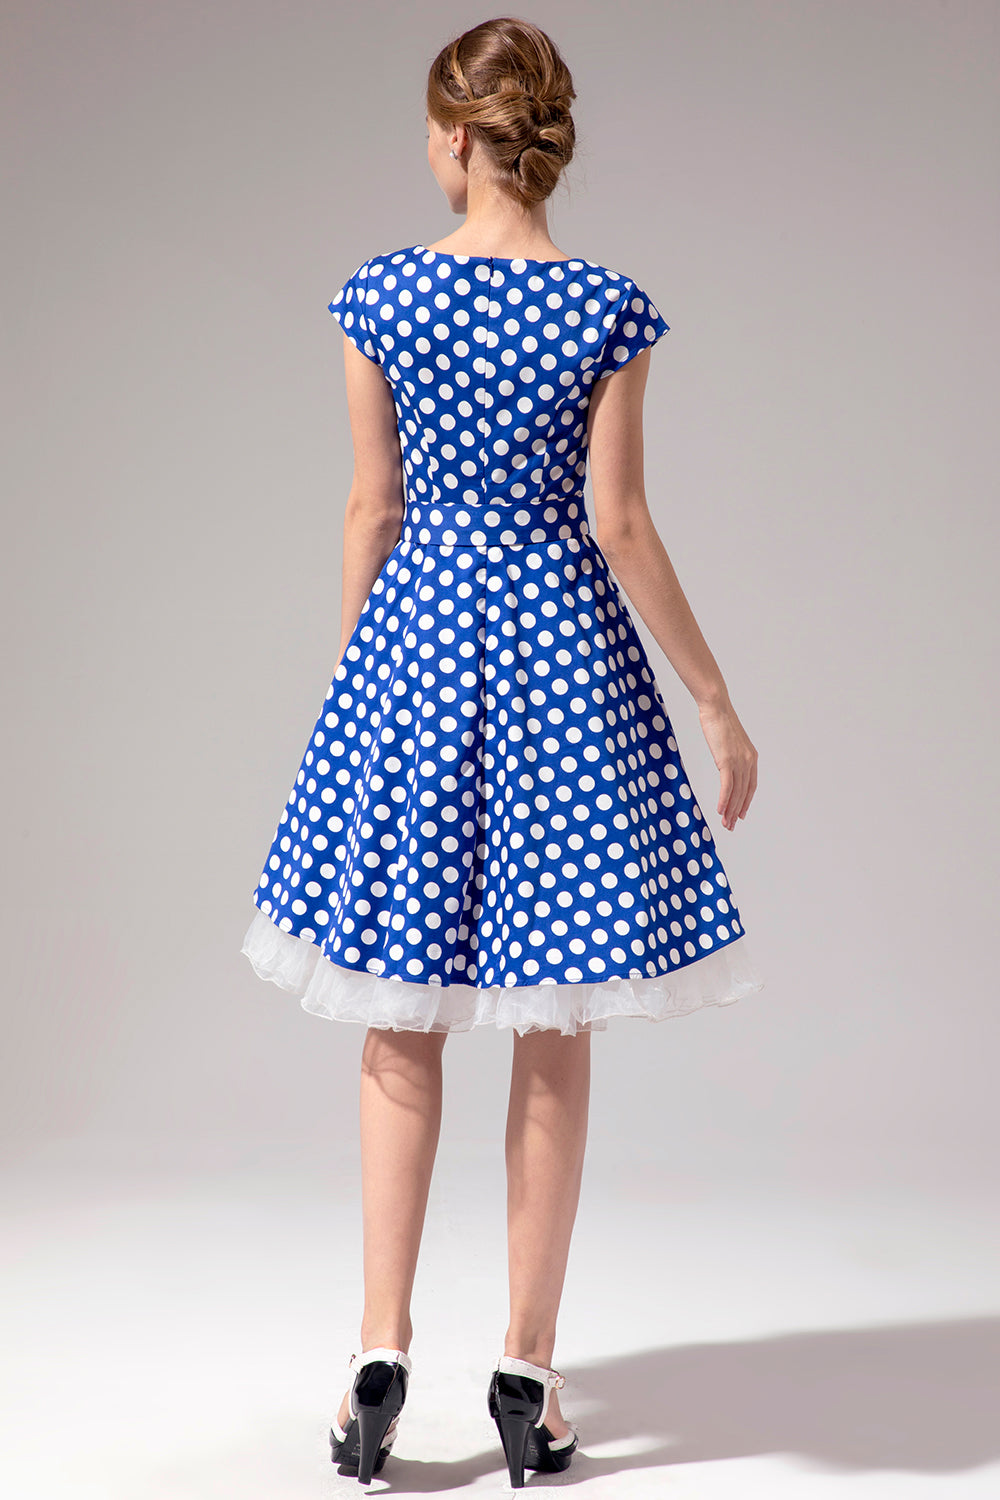 Polka Dots 1950s Swing Dress